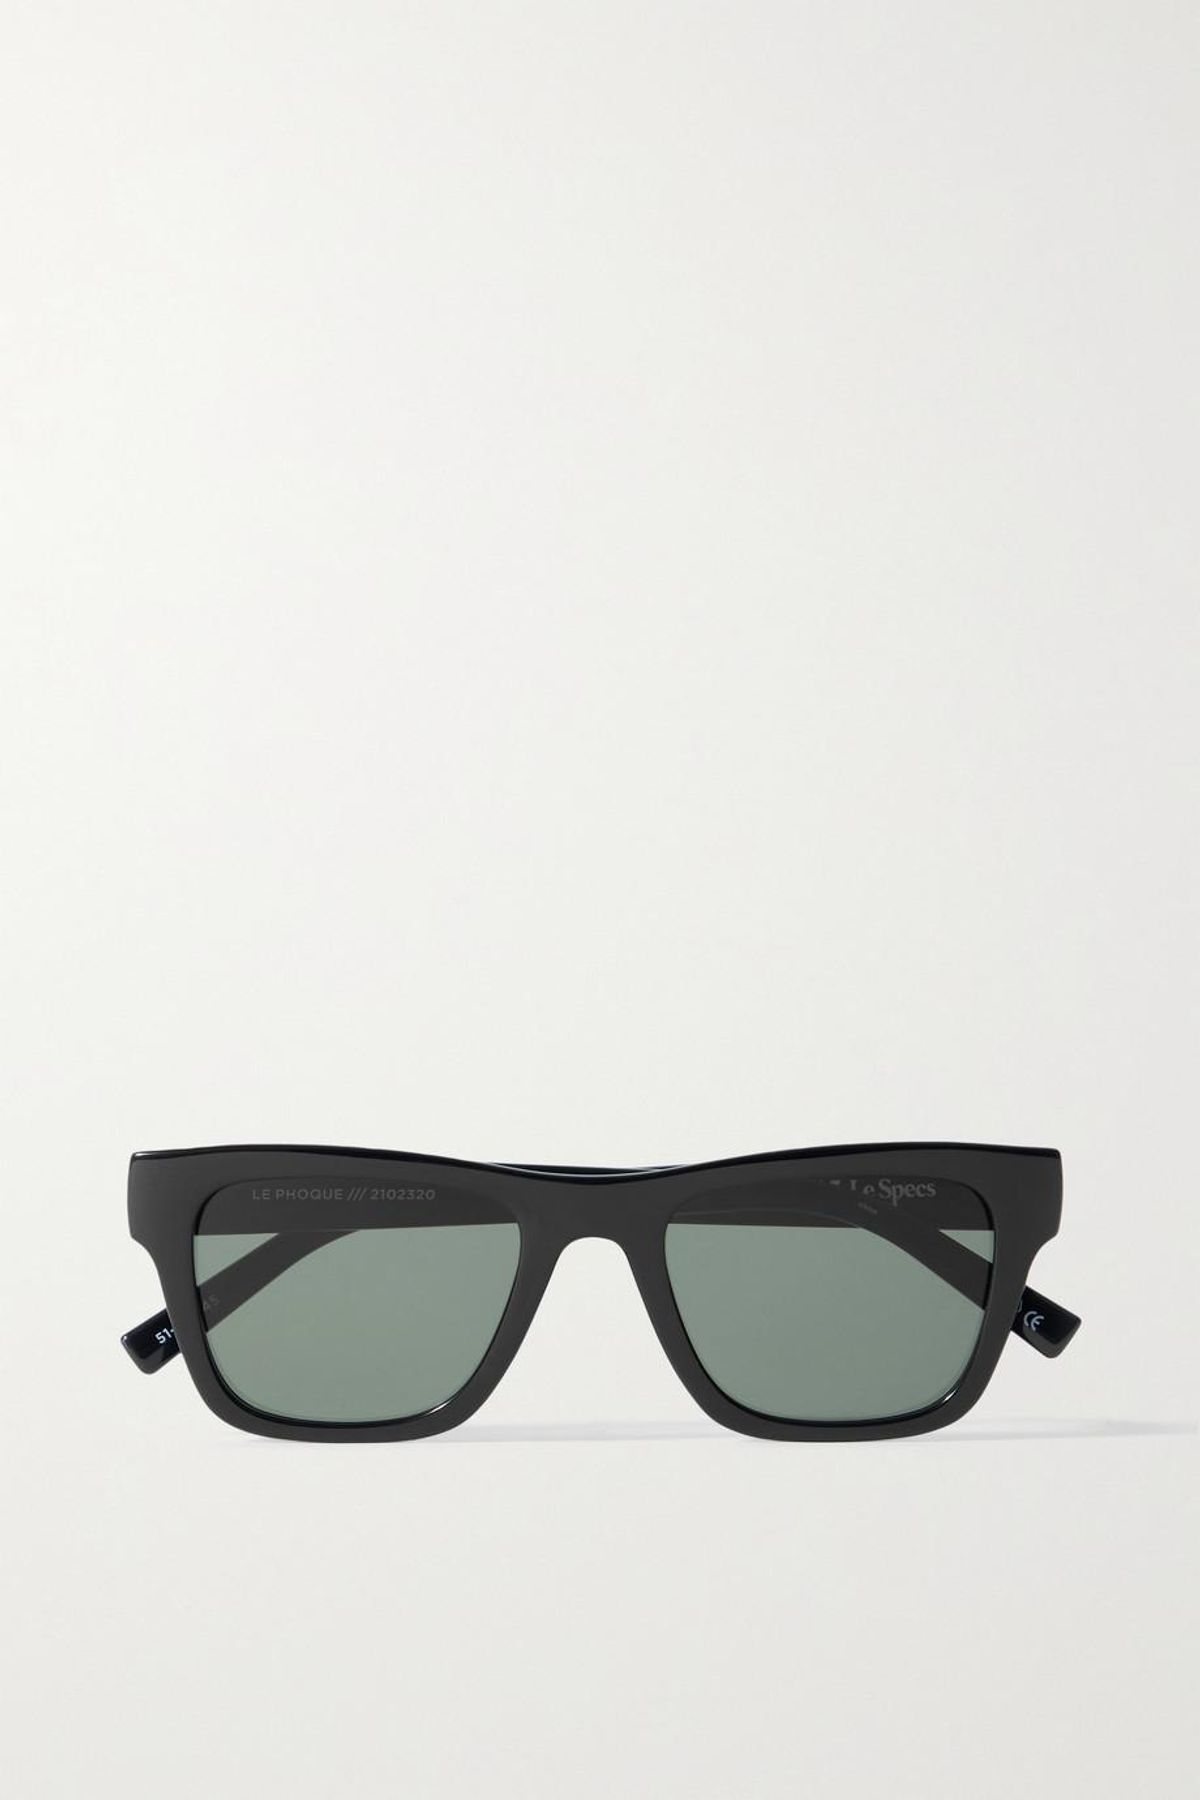 Le Phoque D-frame Acetate Sunglasses